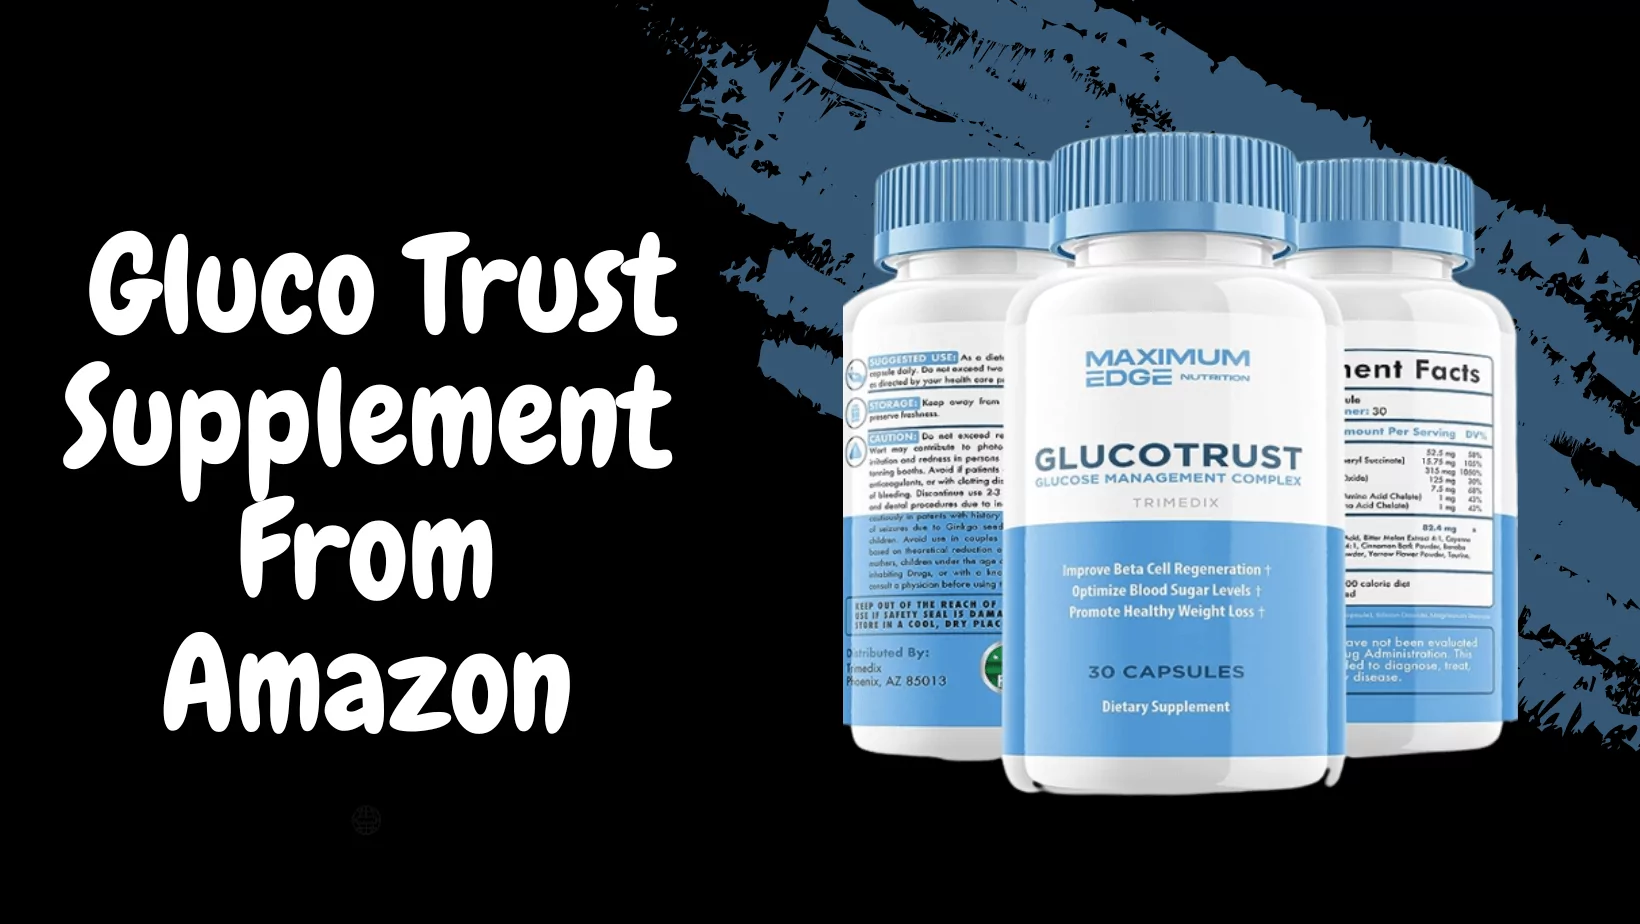 GlucoTrust Supplement From Amazon